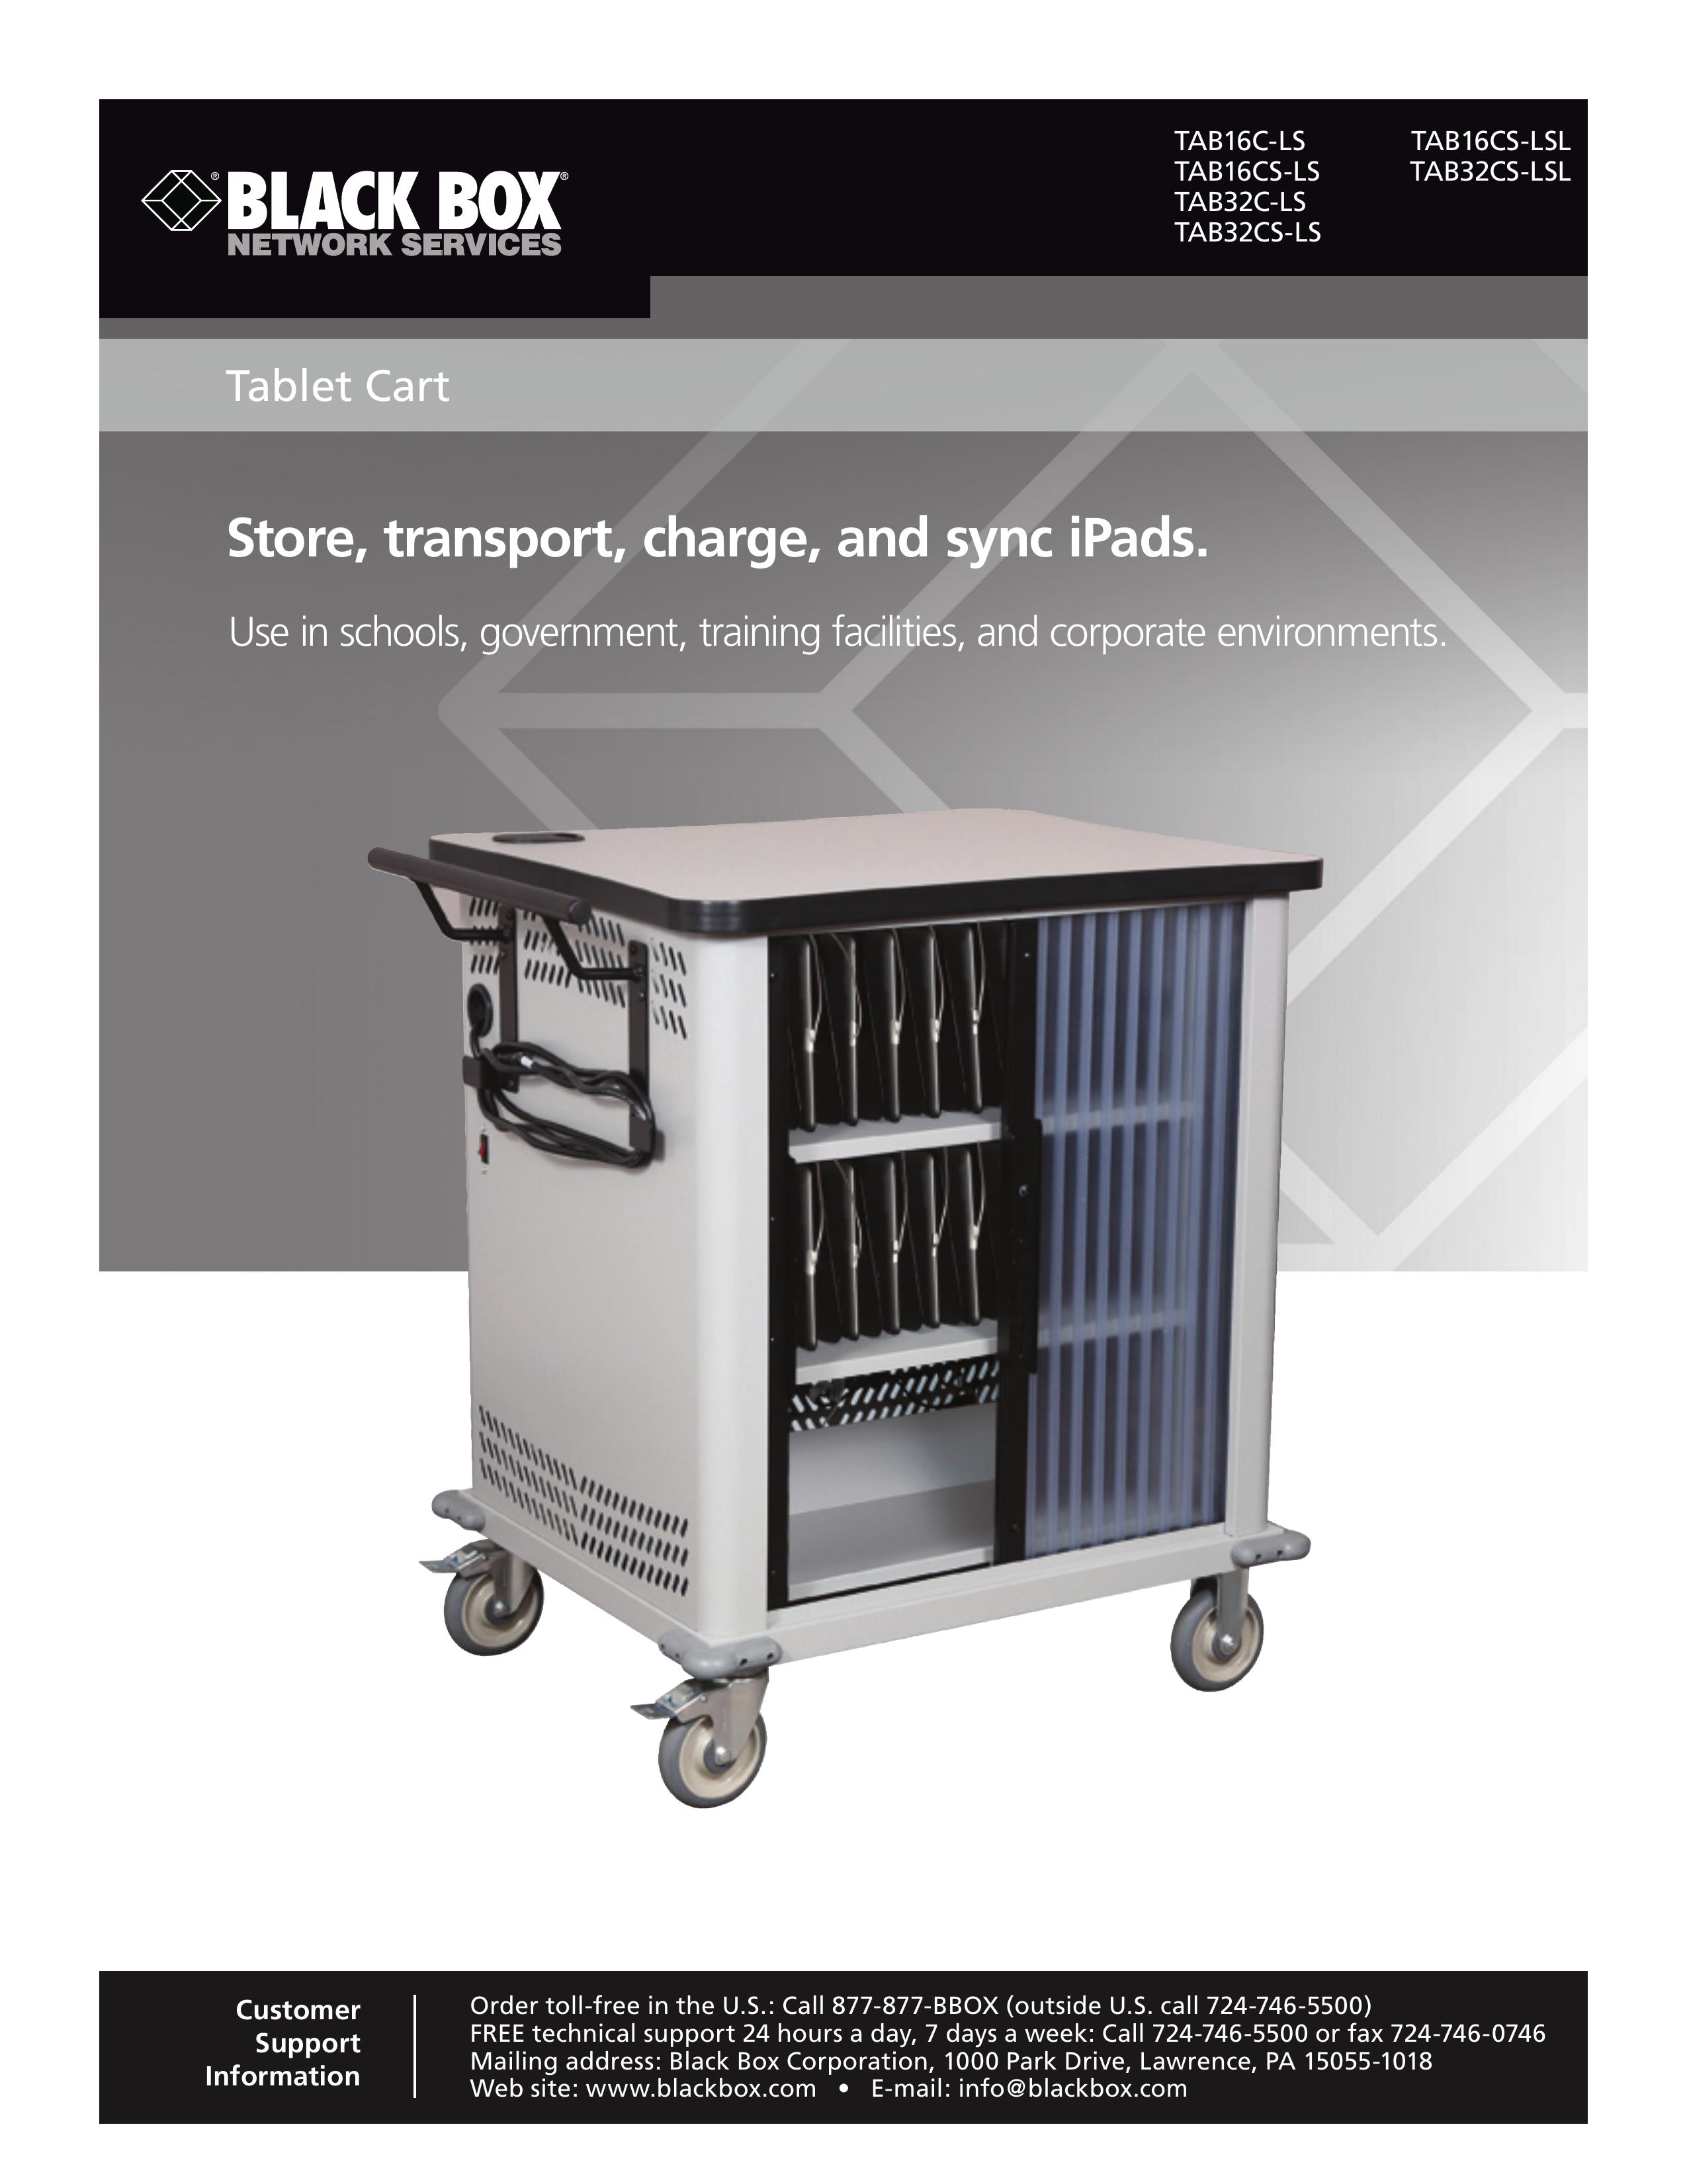 Black Box TAB16C-LS Outdoor Cart User Manual